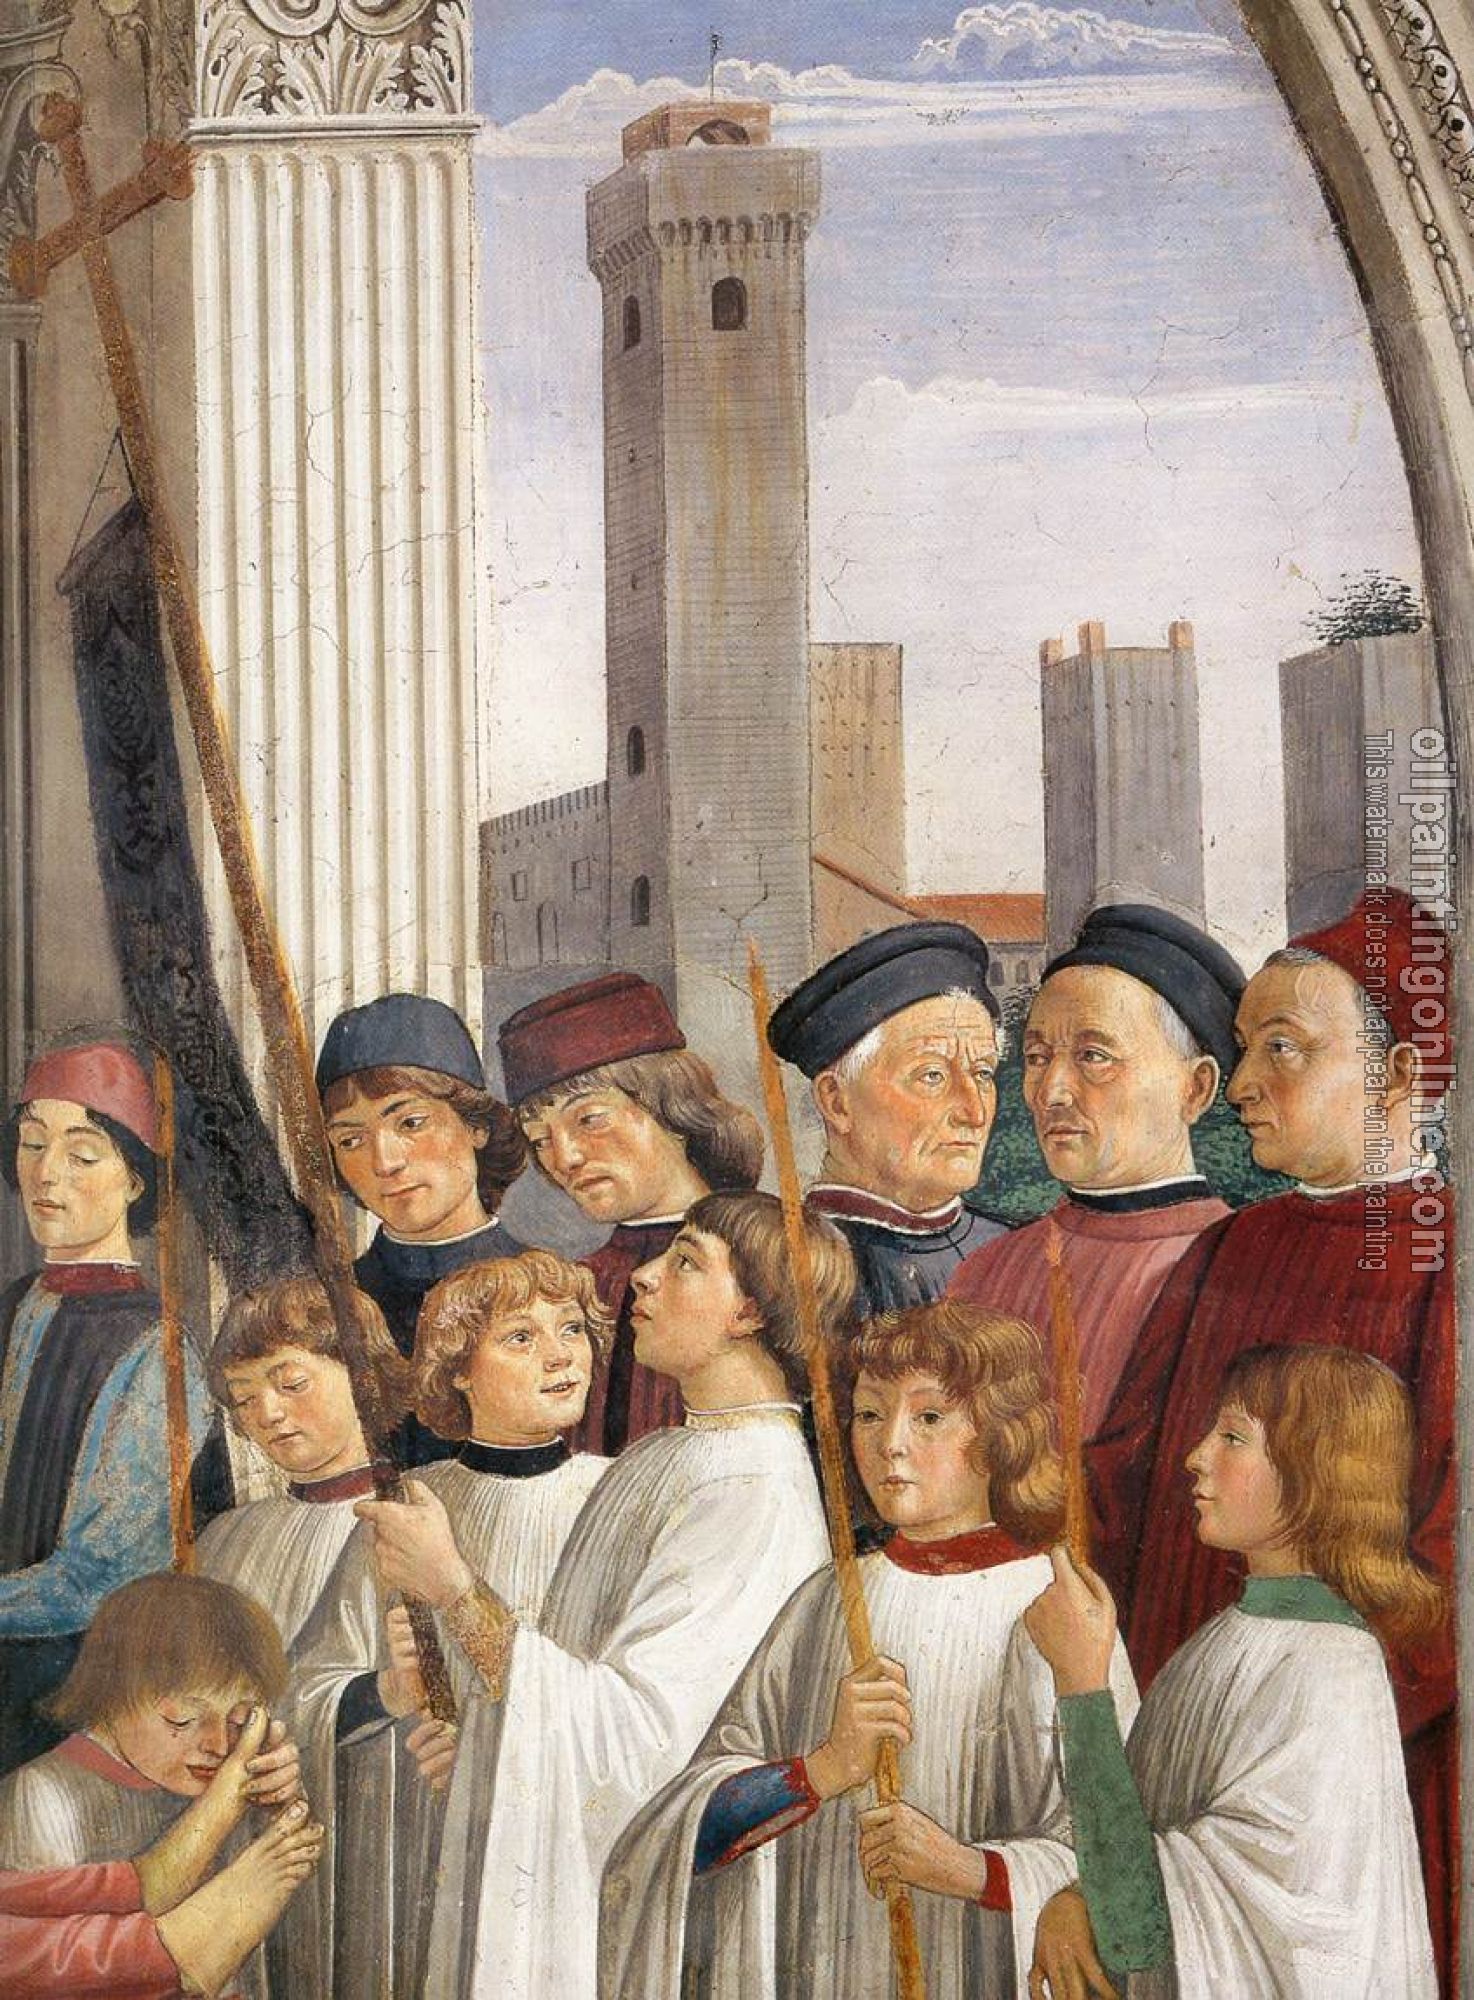 Ghirlandaio, Domenico - Obsequies of St Fina detail